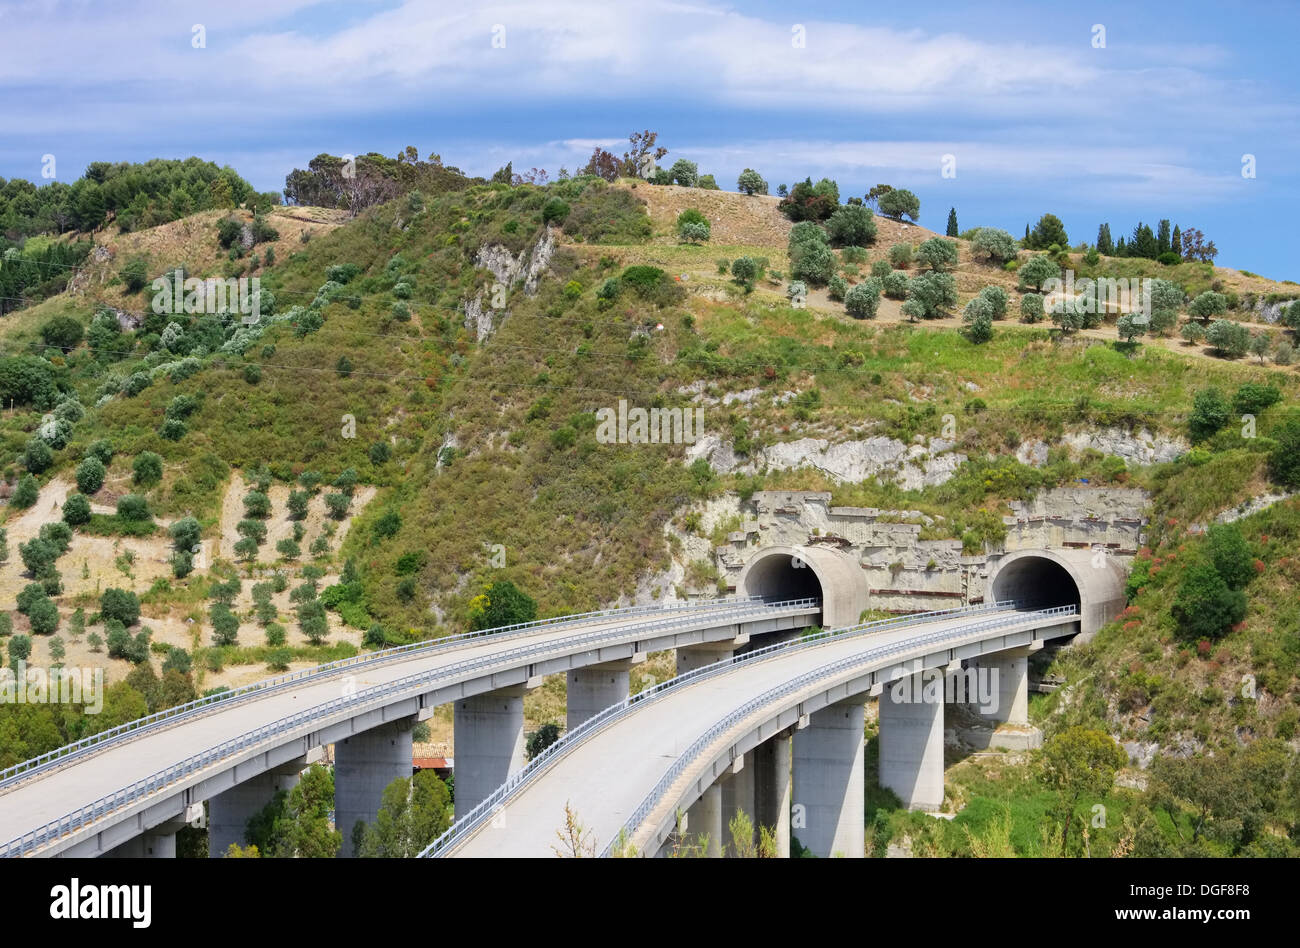 Autobahnbruecke bridgeand - Tunnel und tunnel de l'autoroute 01 Banque D'Images